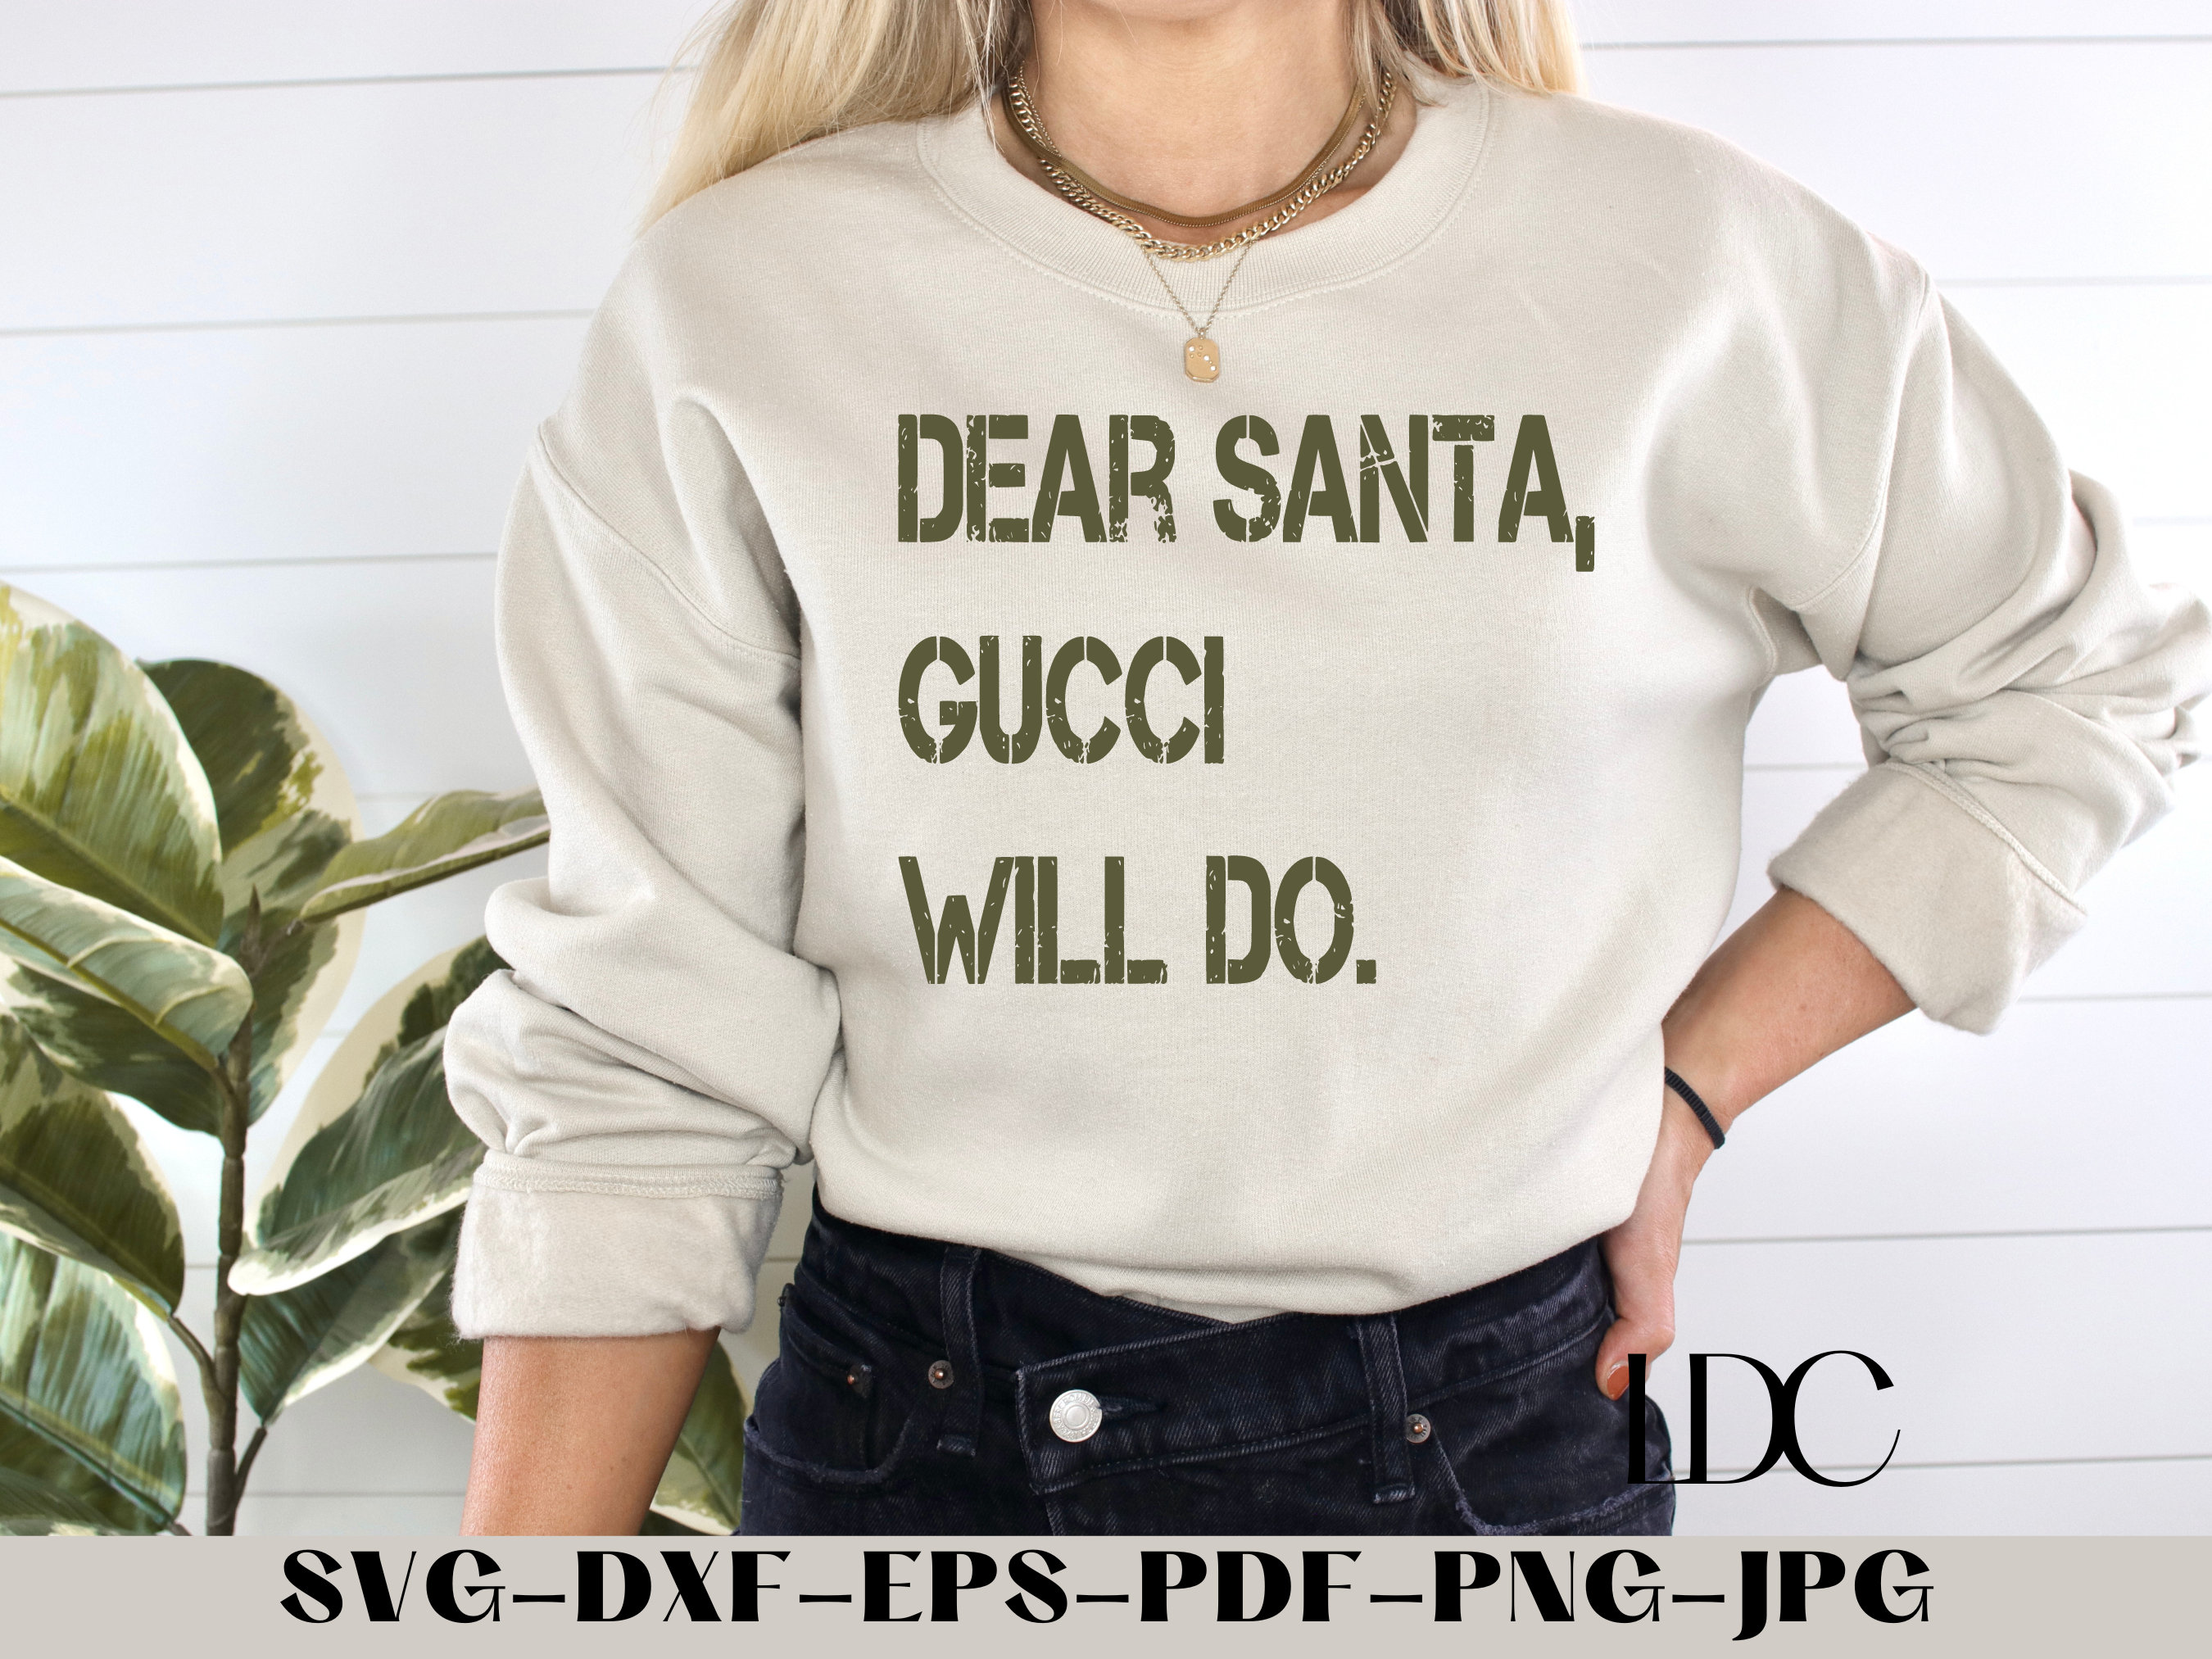 Gucci Pattern SVG - Gucci digital paper - Gucci Pattern seamless